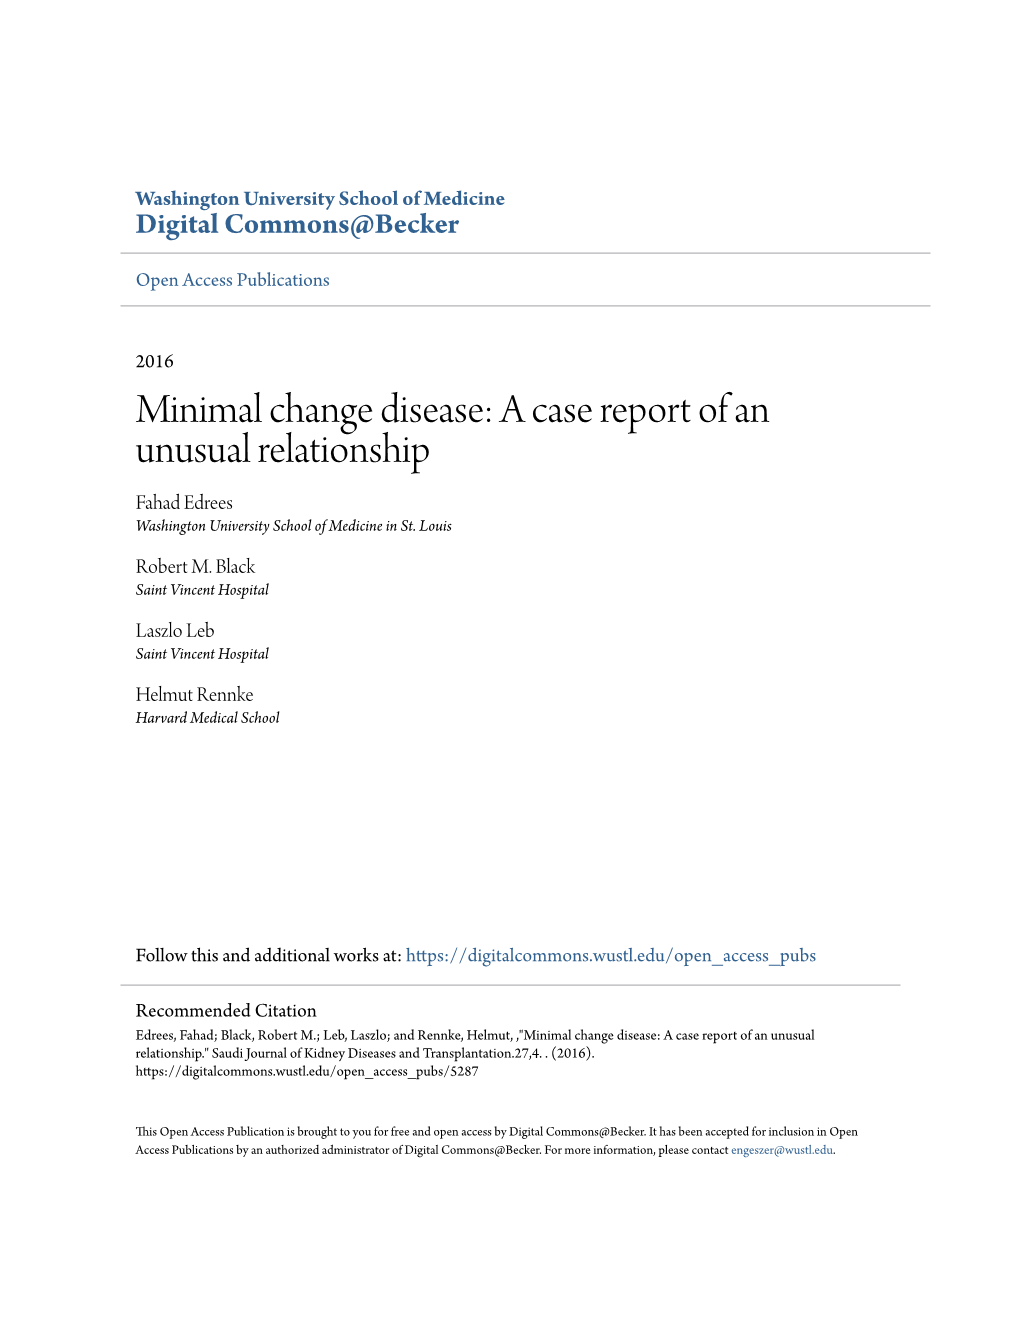 Minimal Change Disease: a Case Report of an Unusual Relationship Fahad Edrees Washington University School of Medicine in St